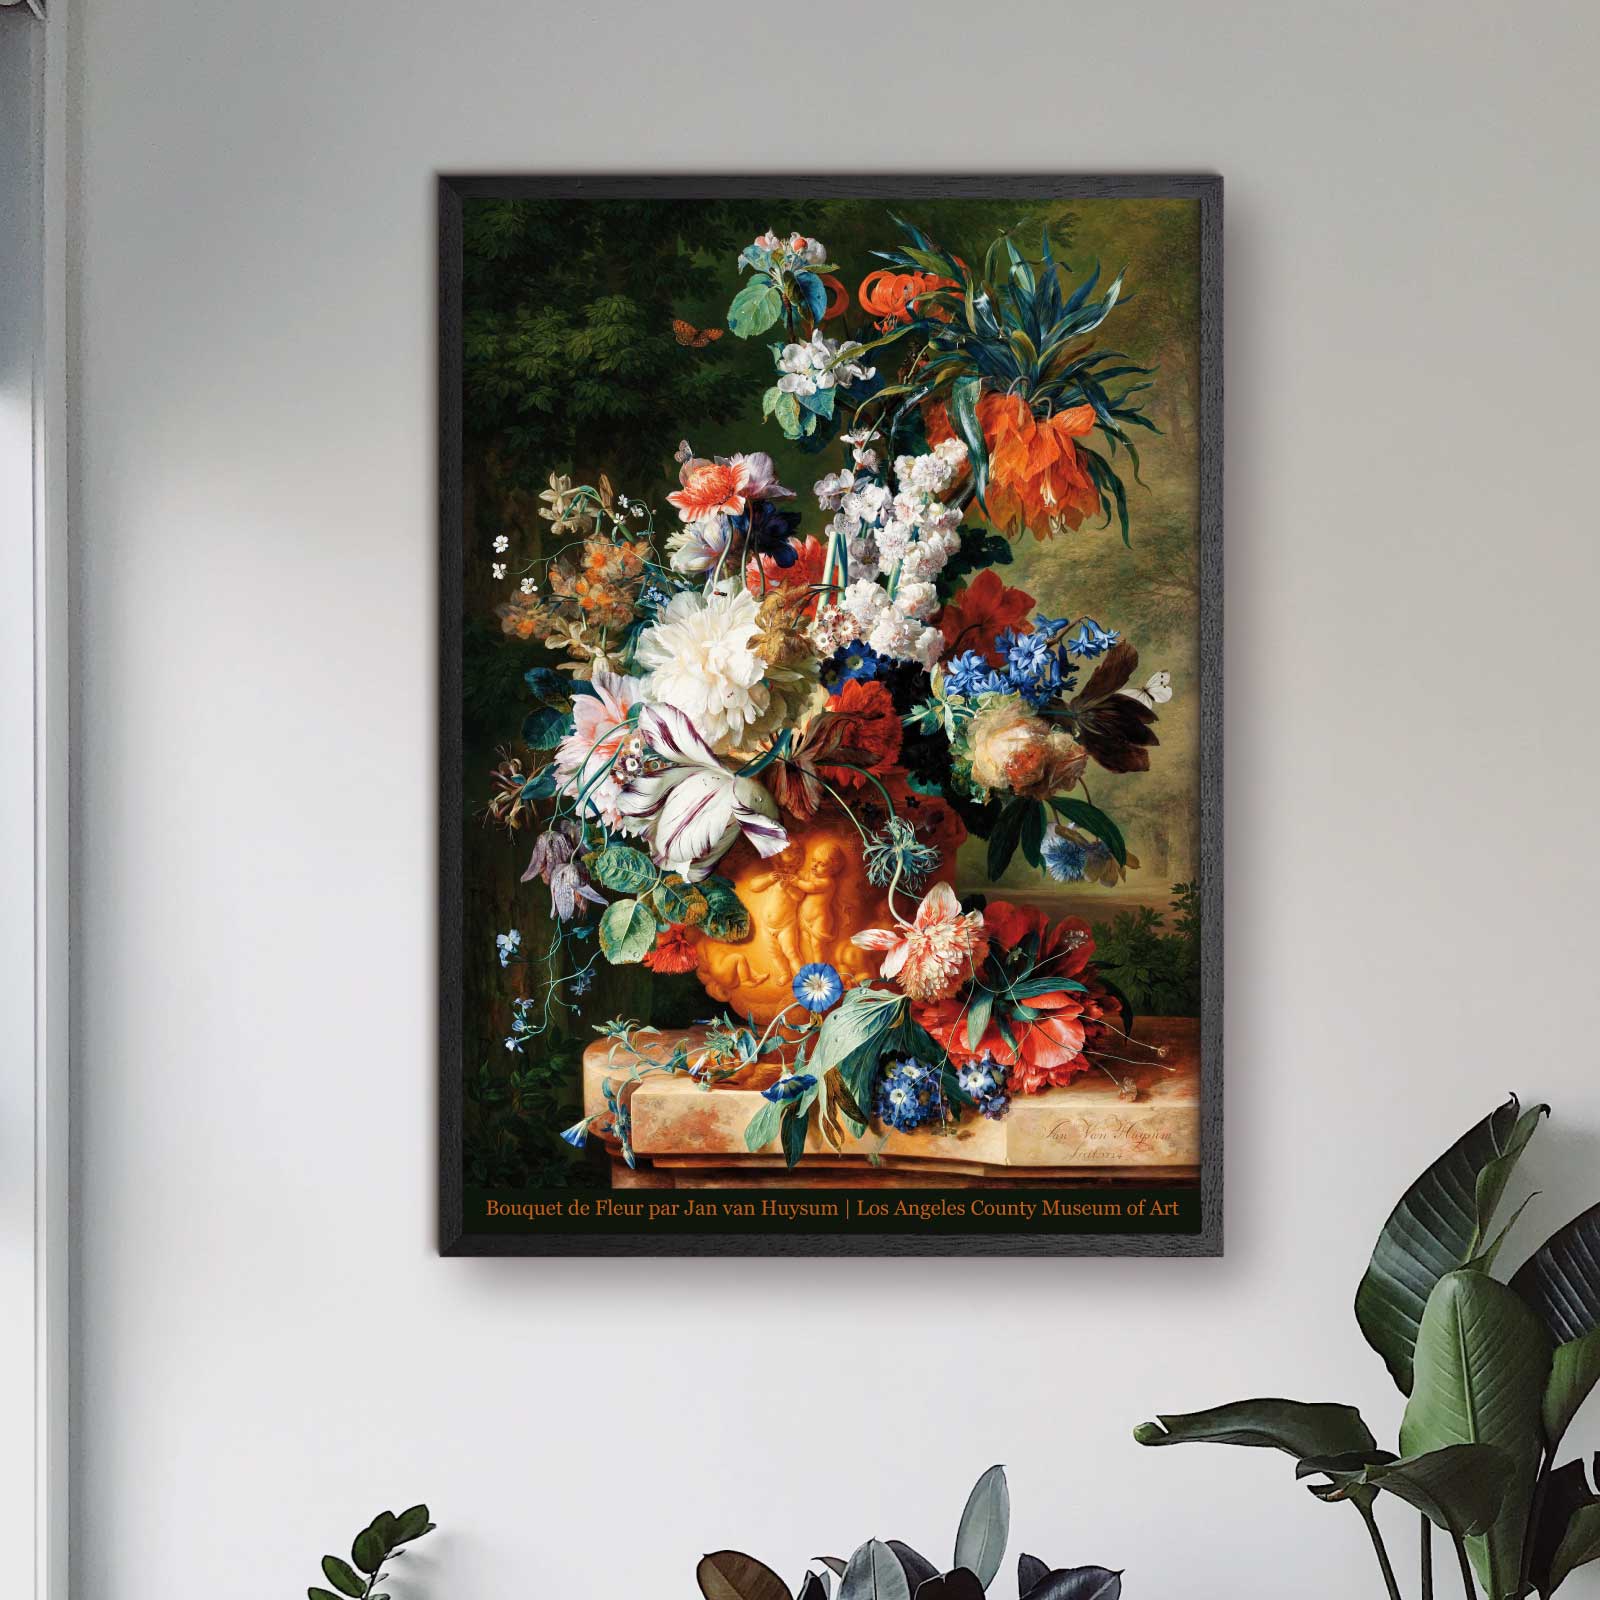 Art poster with Jan van Huysom "Bouquet de Fleurs"